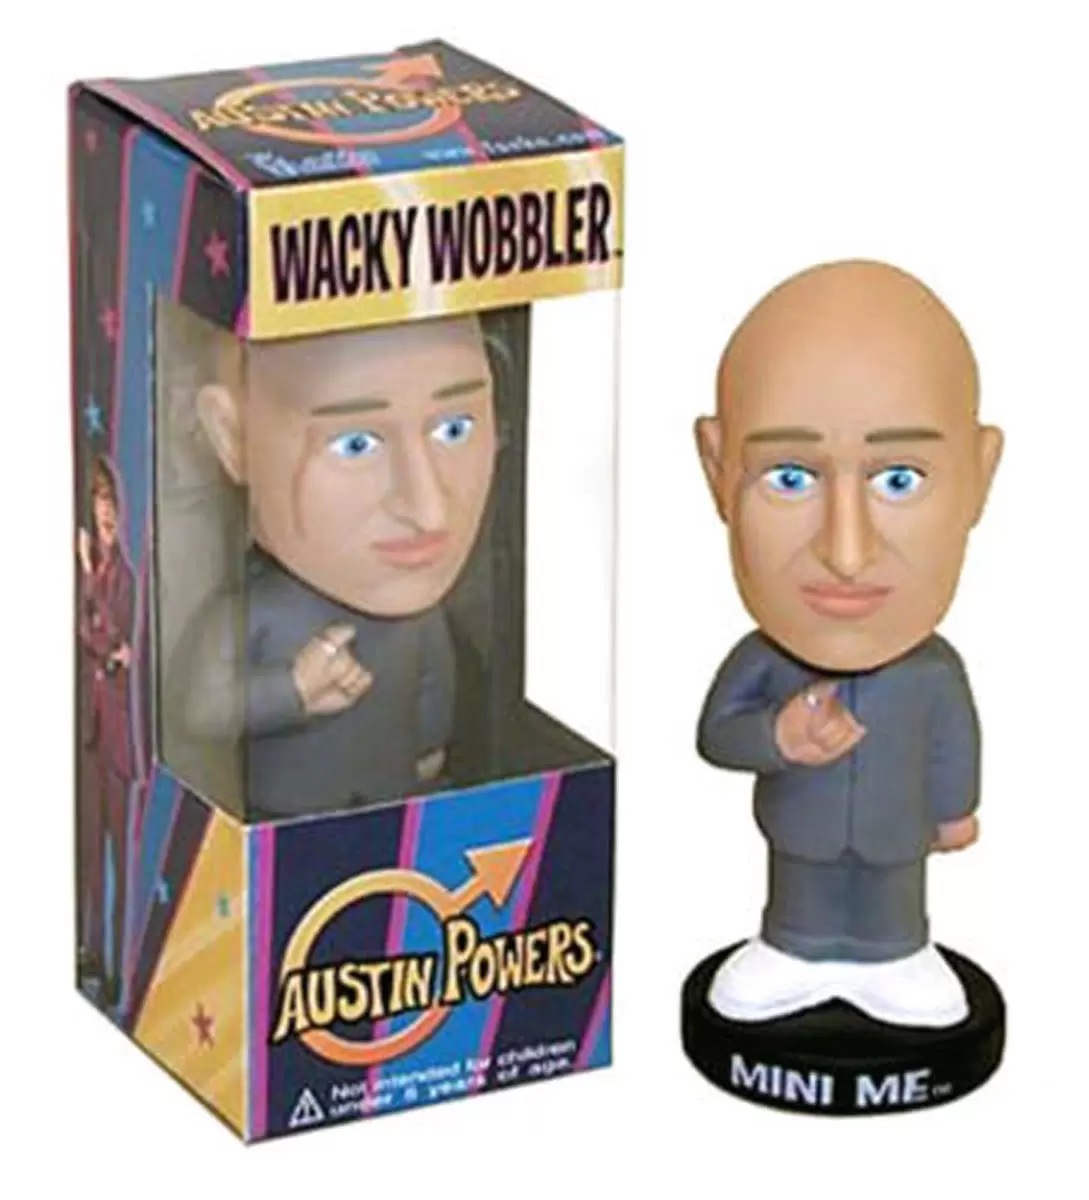 Wacky Wobbler Movies - Austin Powers - Mini Me